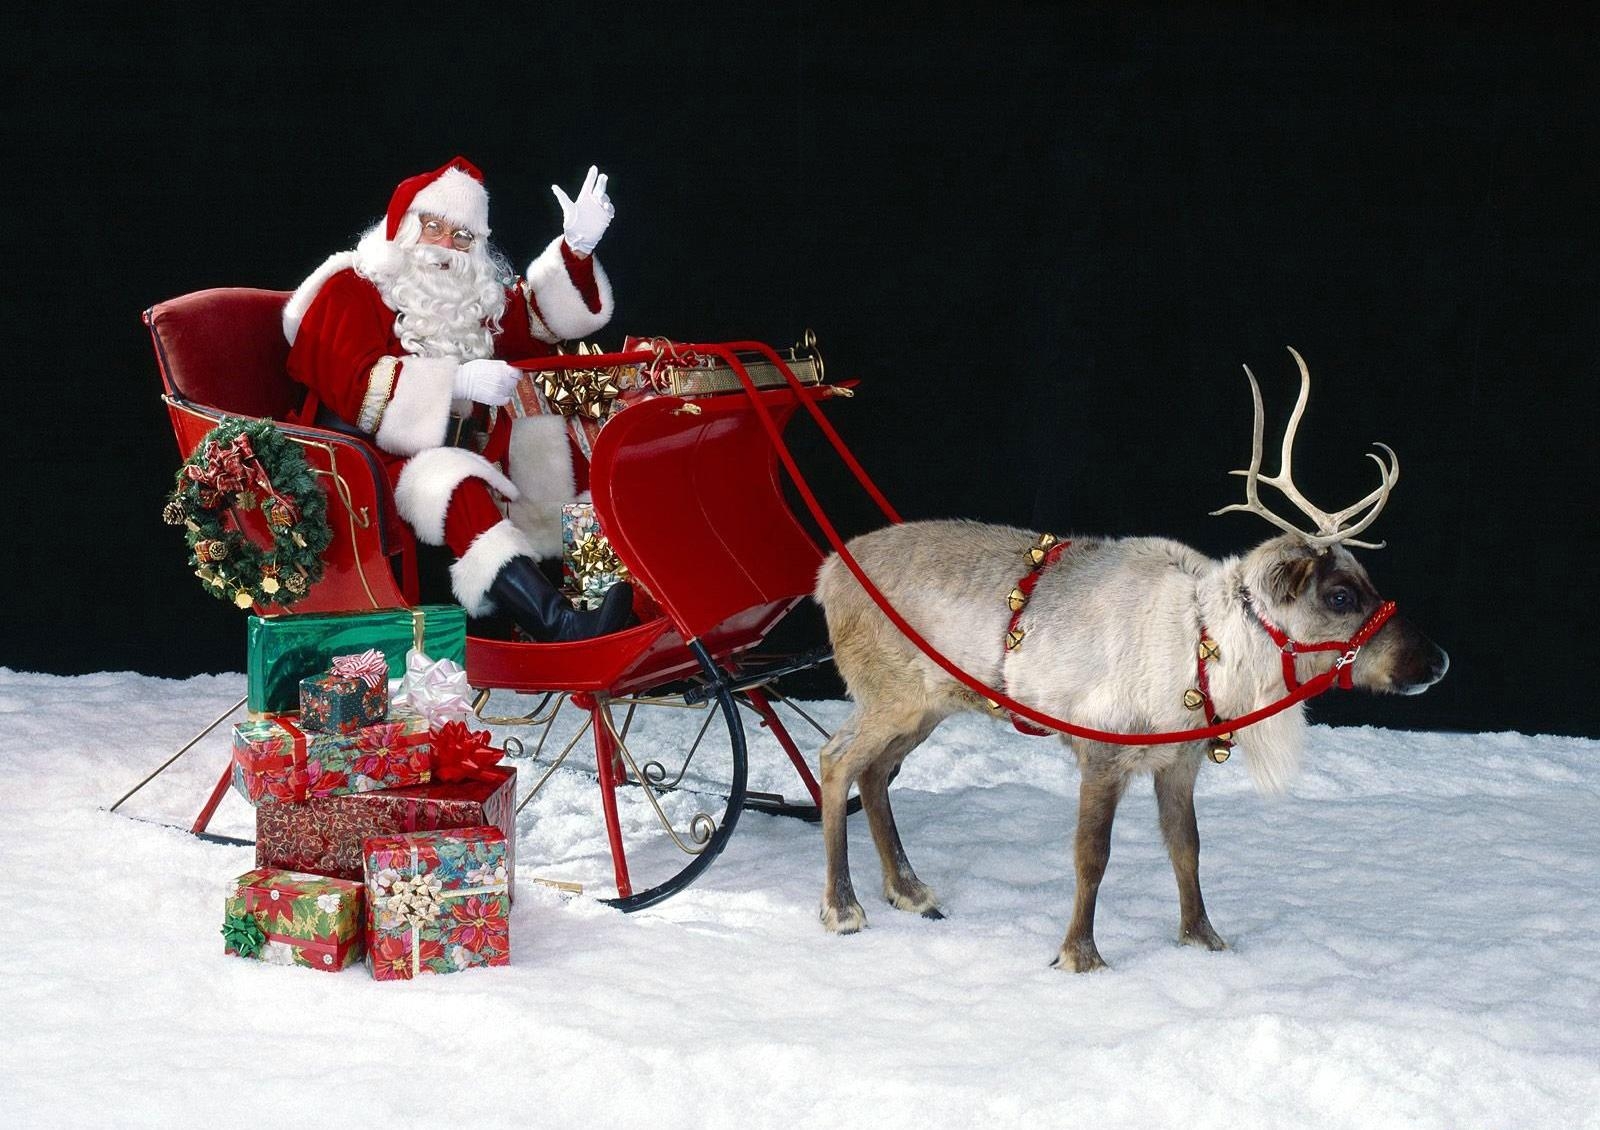 holidays, santa claus, snow, deer, bag, sleigh, sledge, sack, presents, gifts